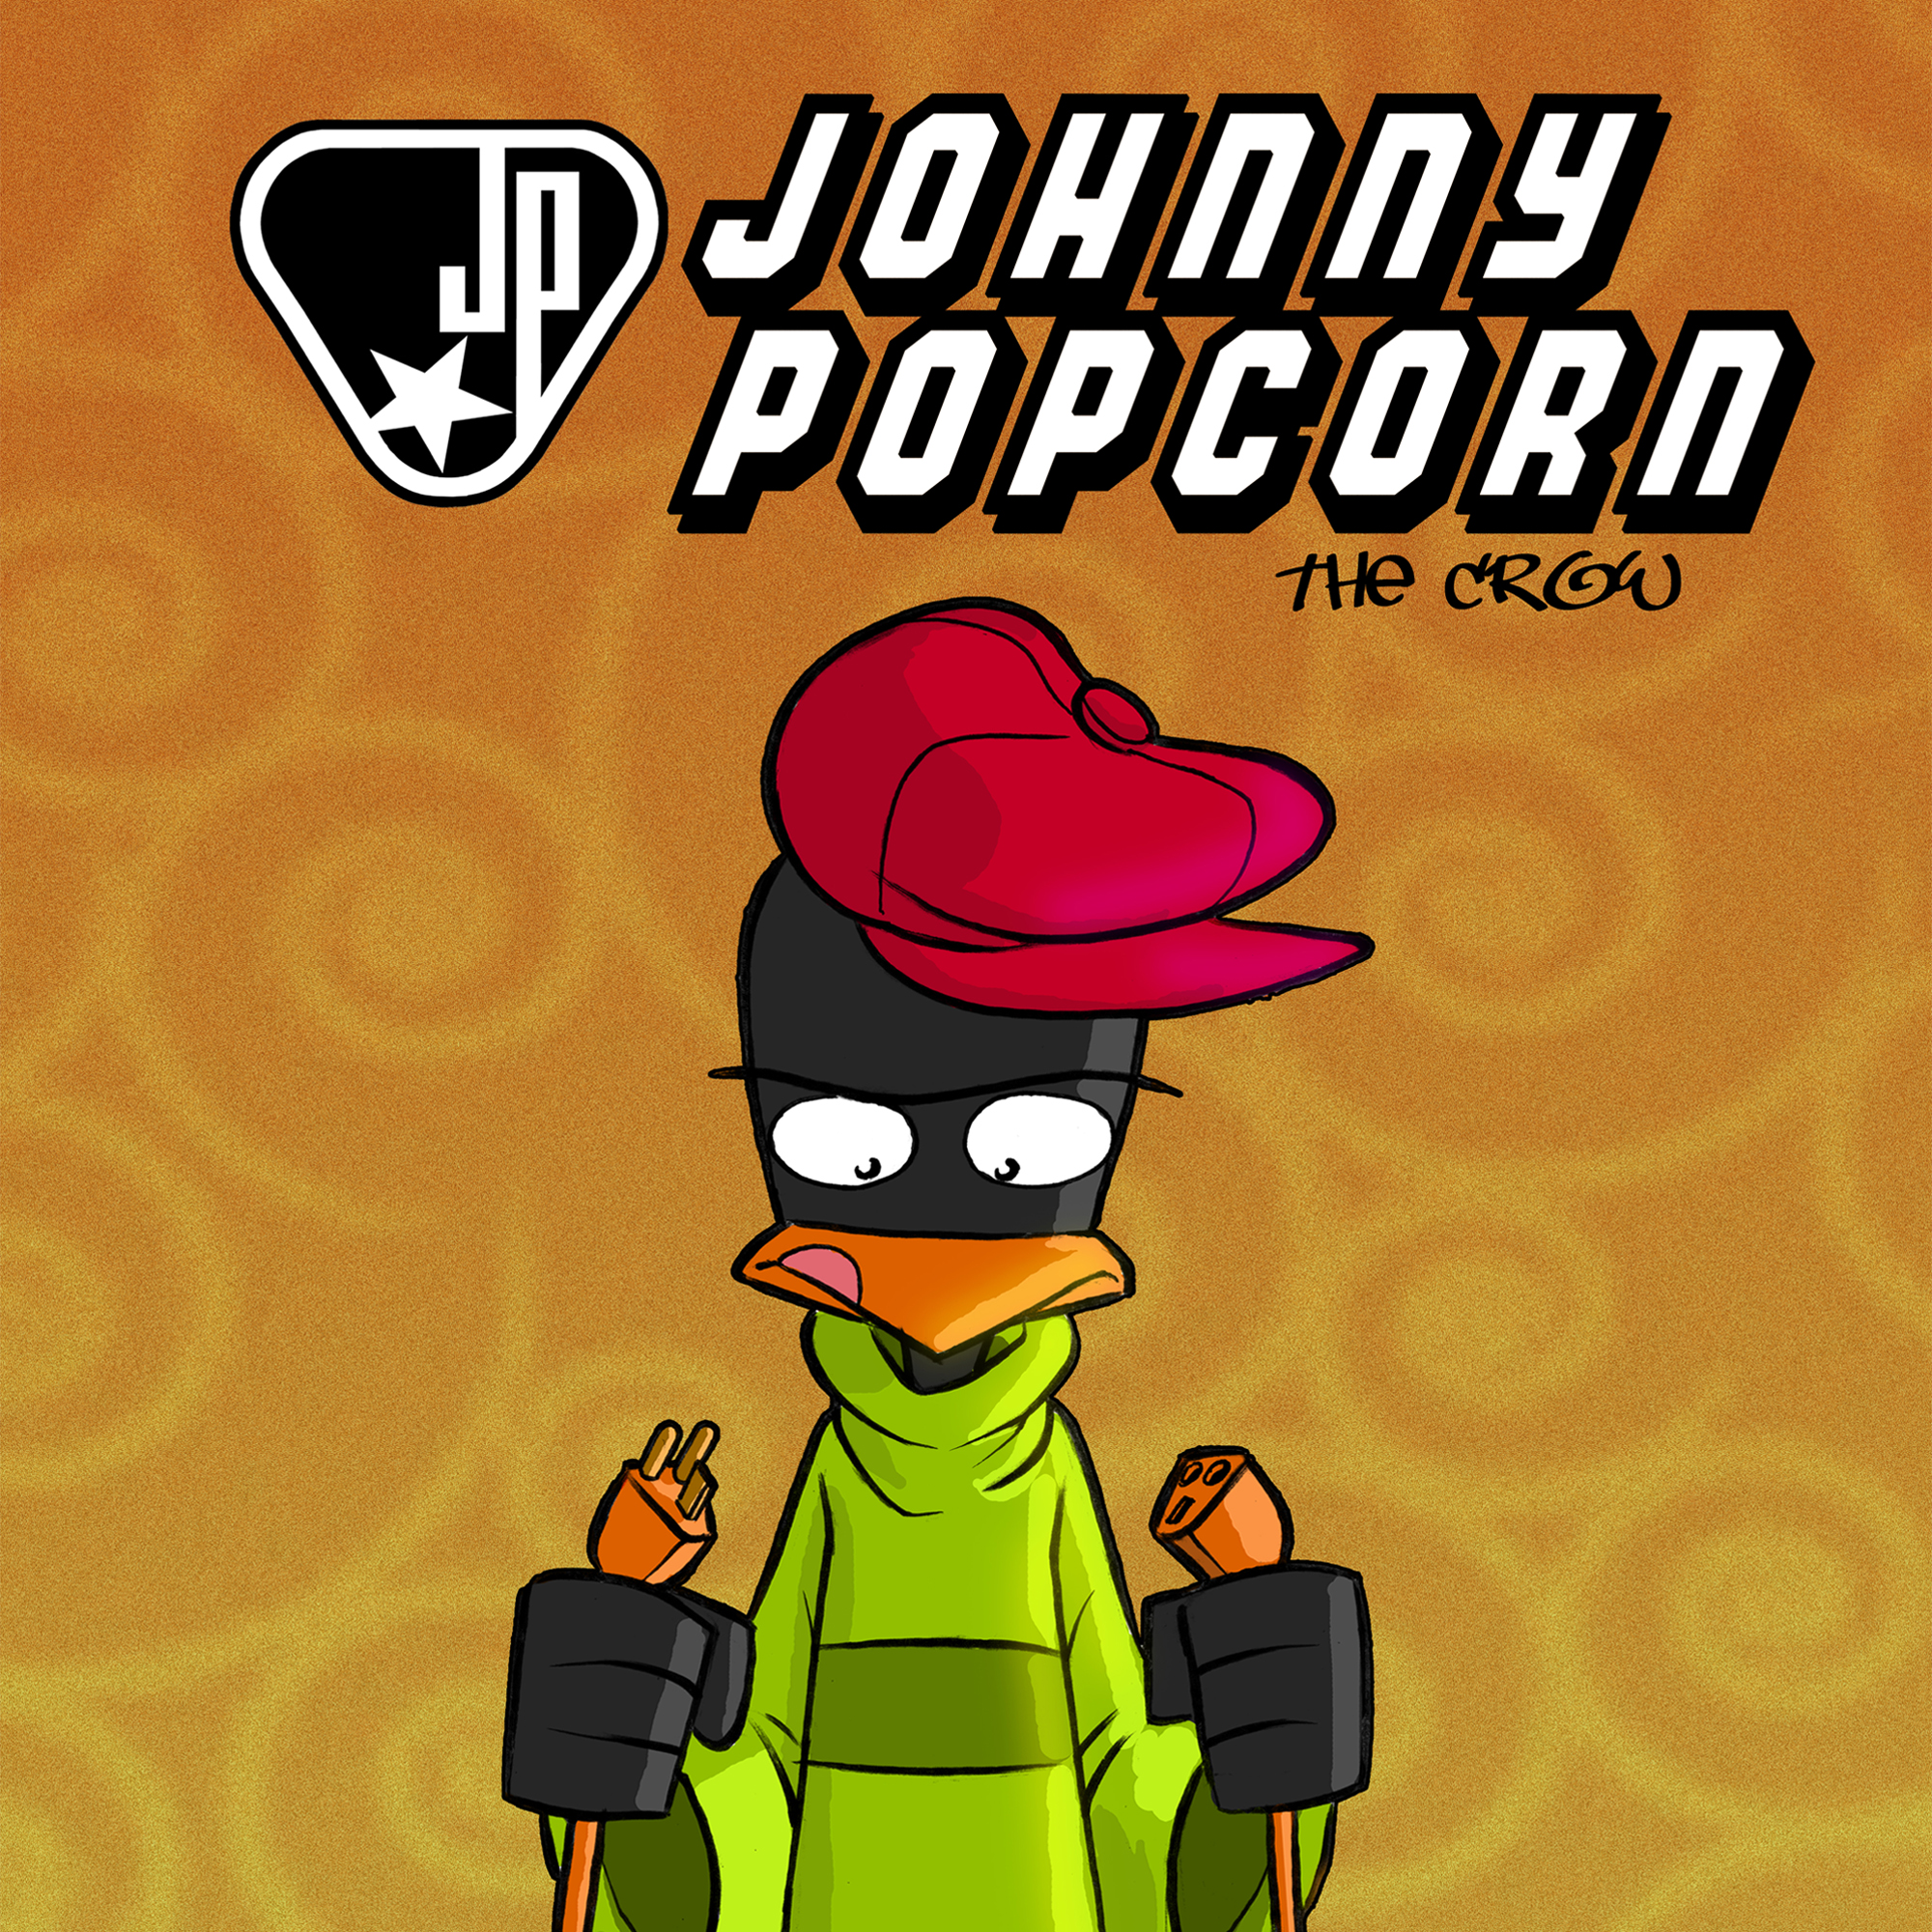 Johhny Popcorn "The Crow" Release | @hezekiah3rd